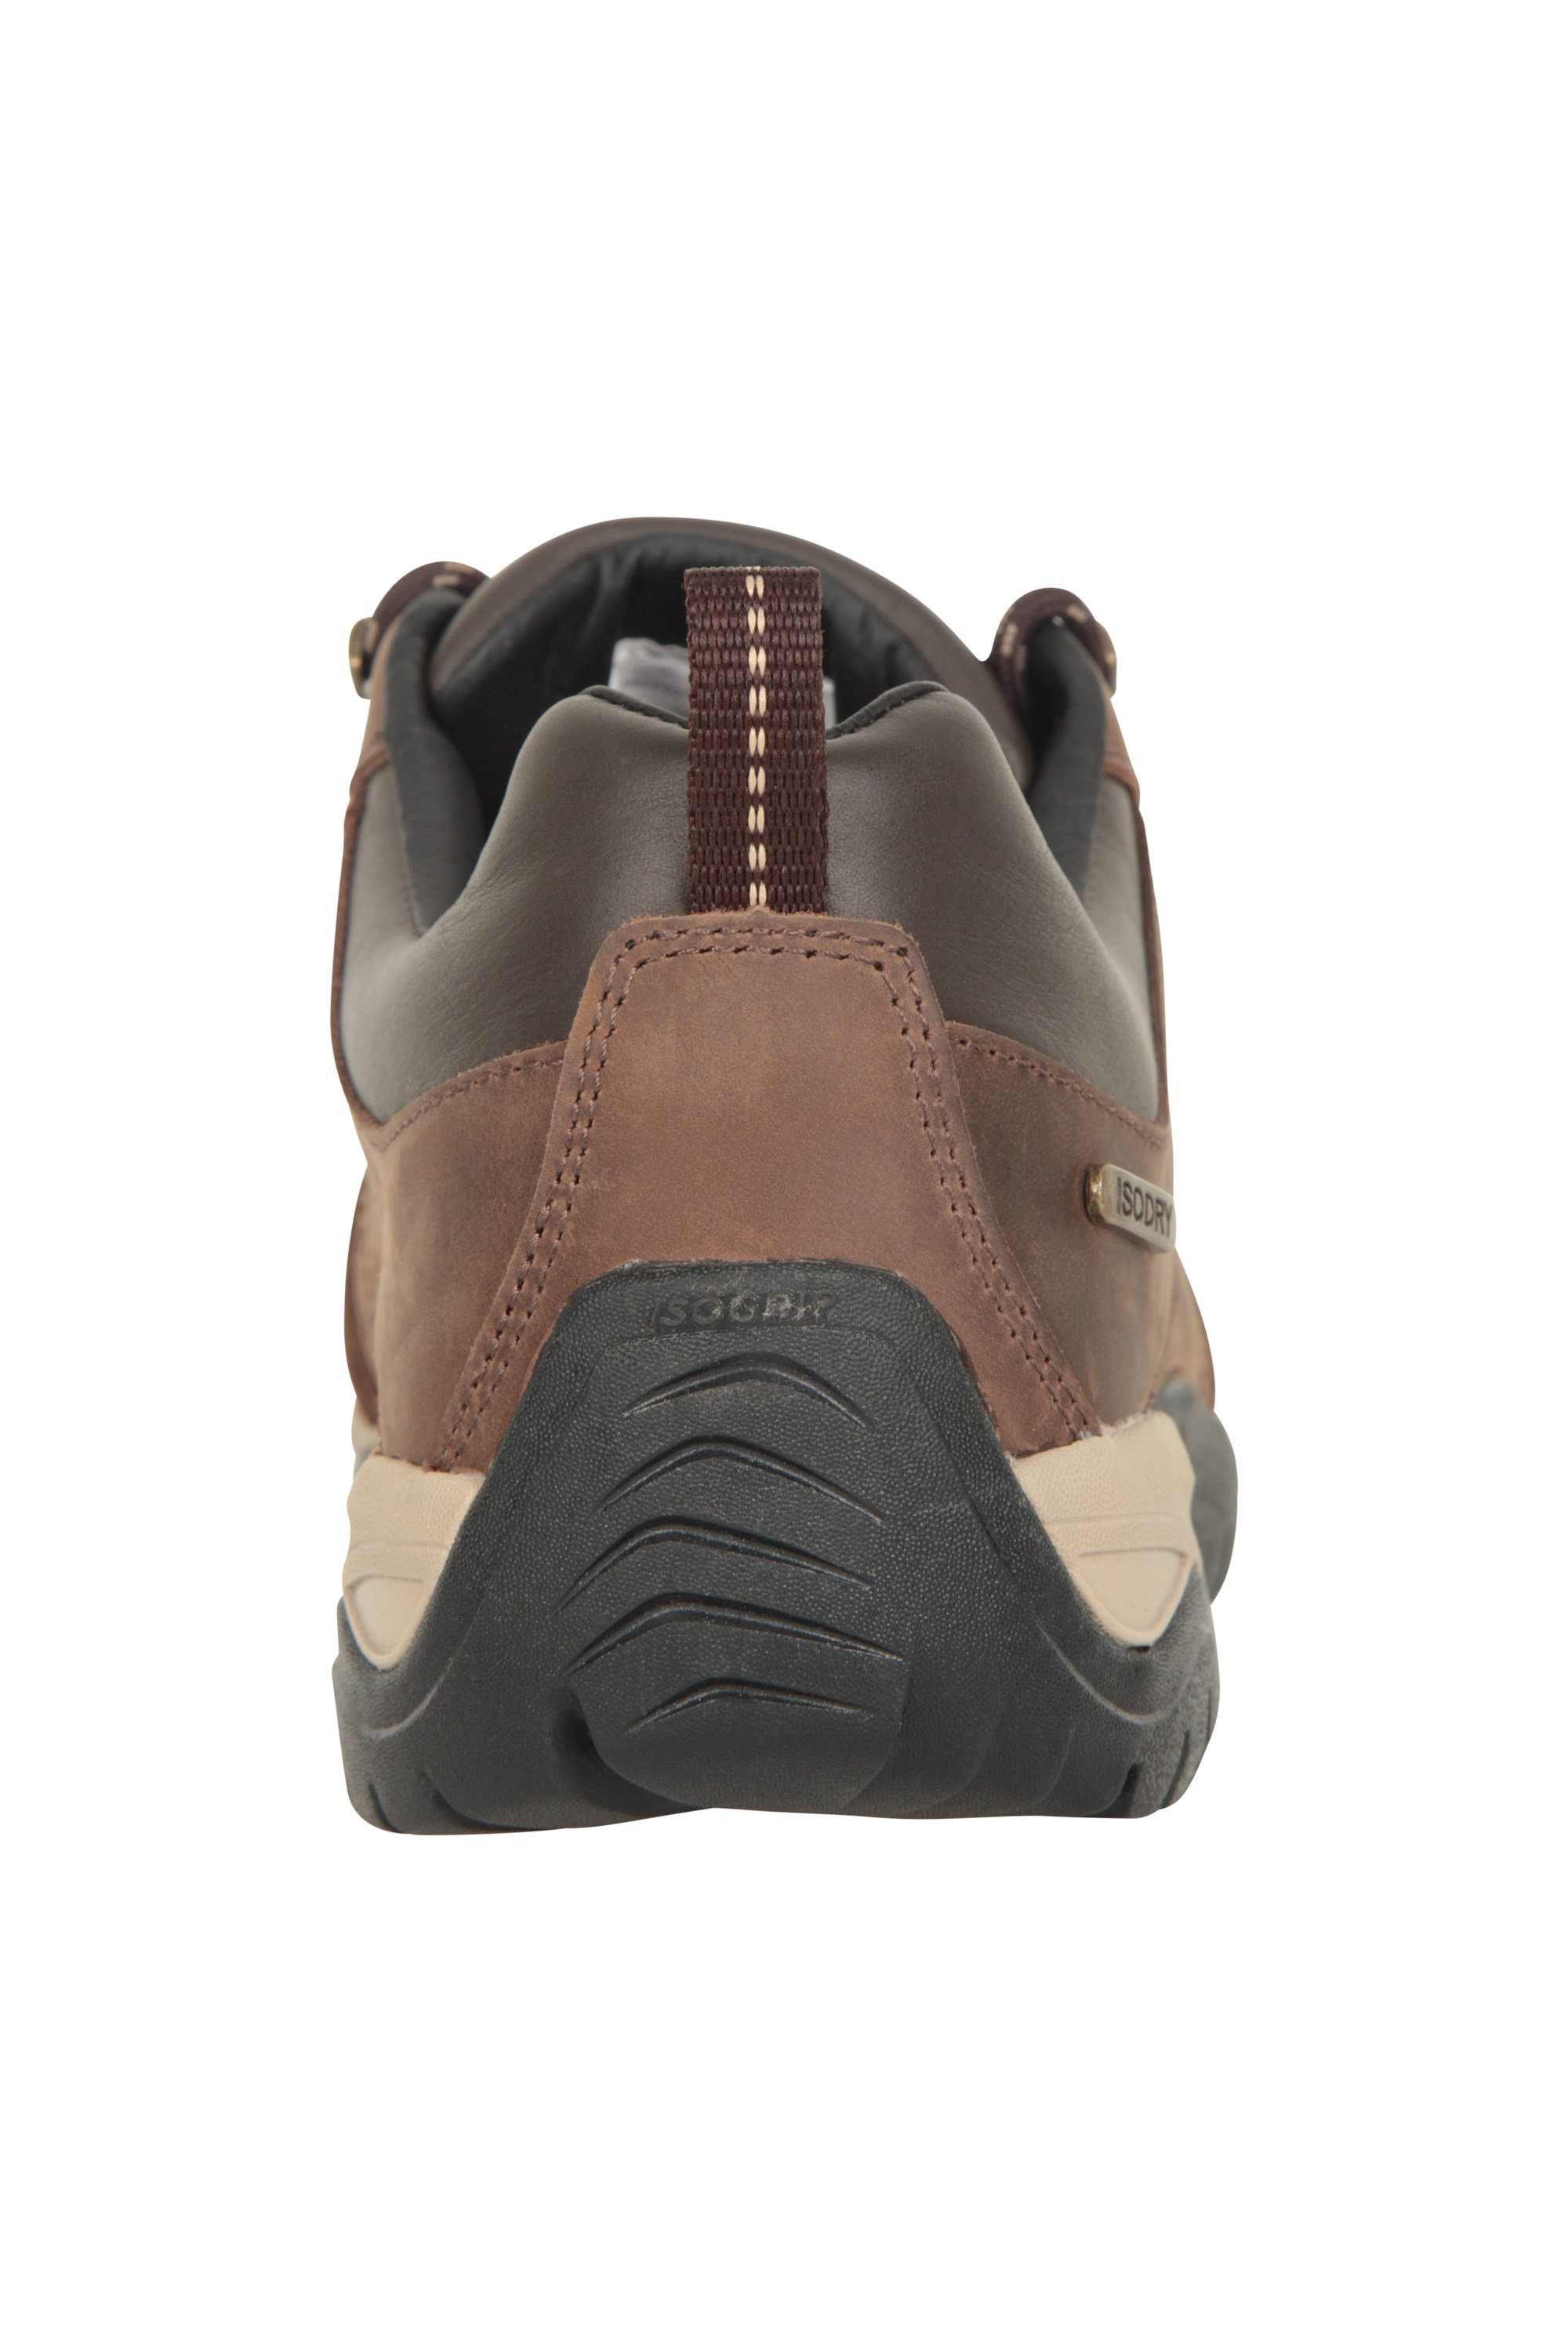 Pioneer II Mens Waterproof Extreme Leather Hiking Shoes